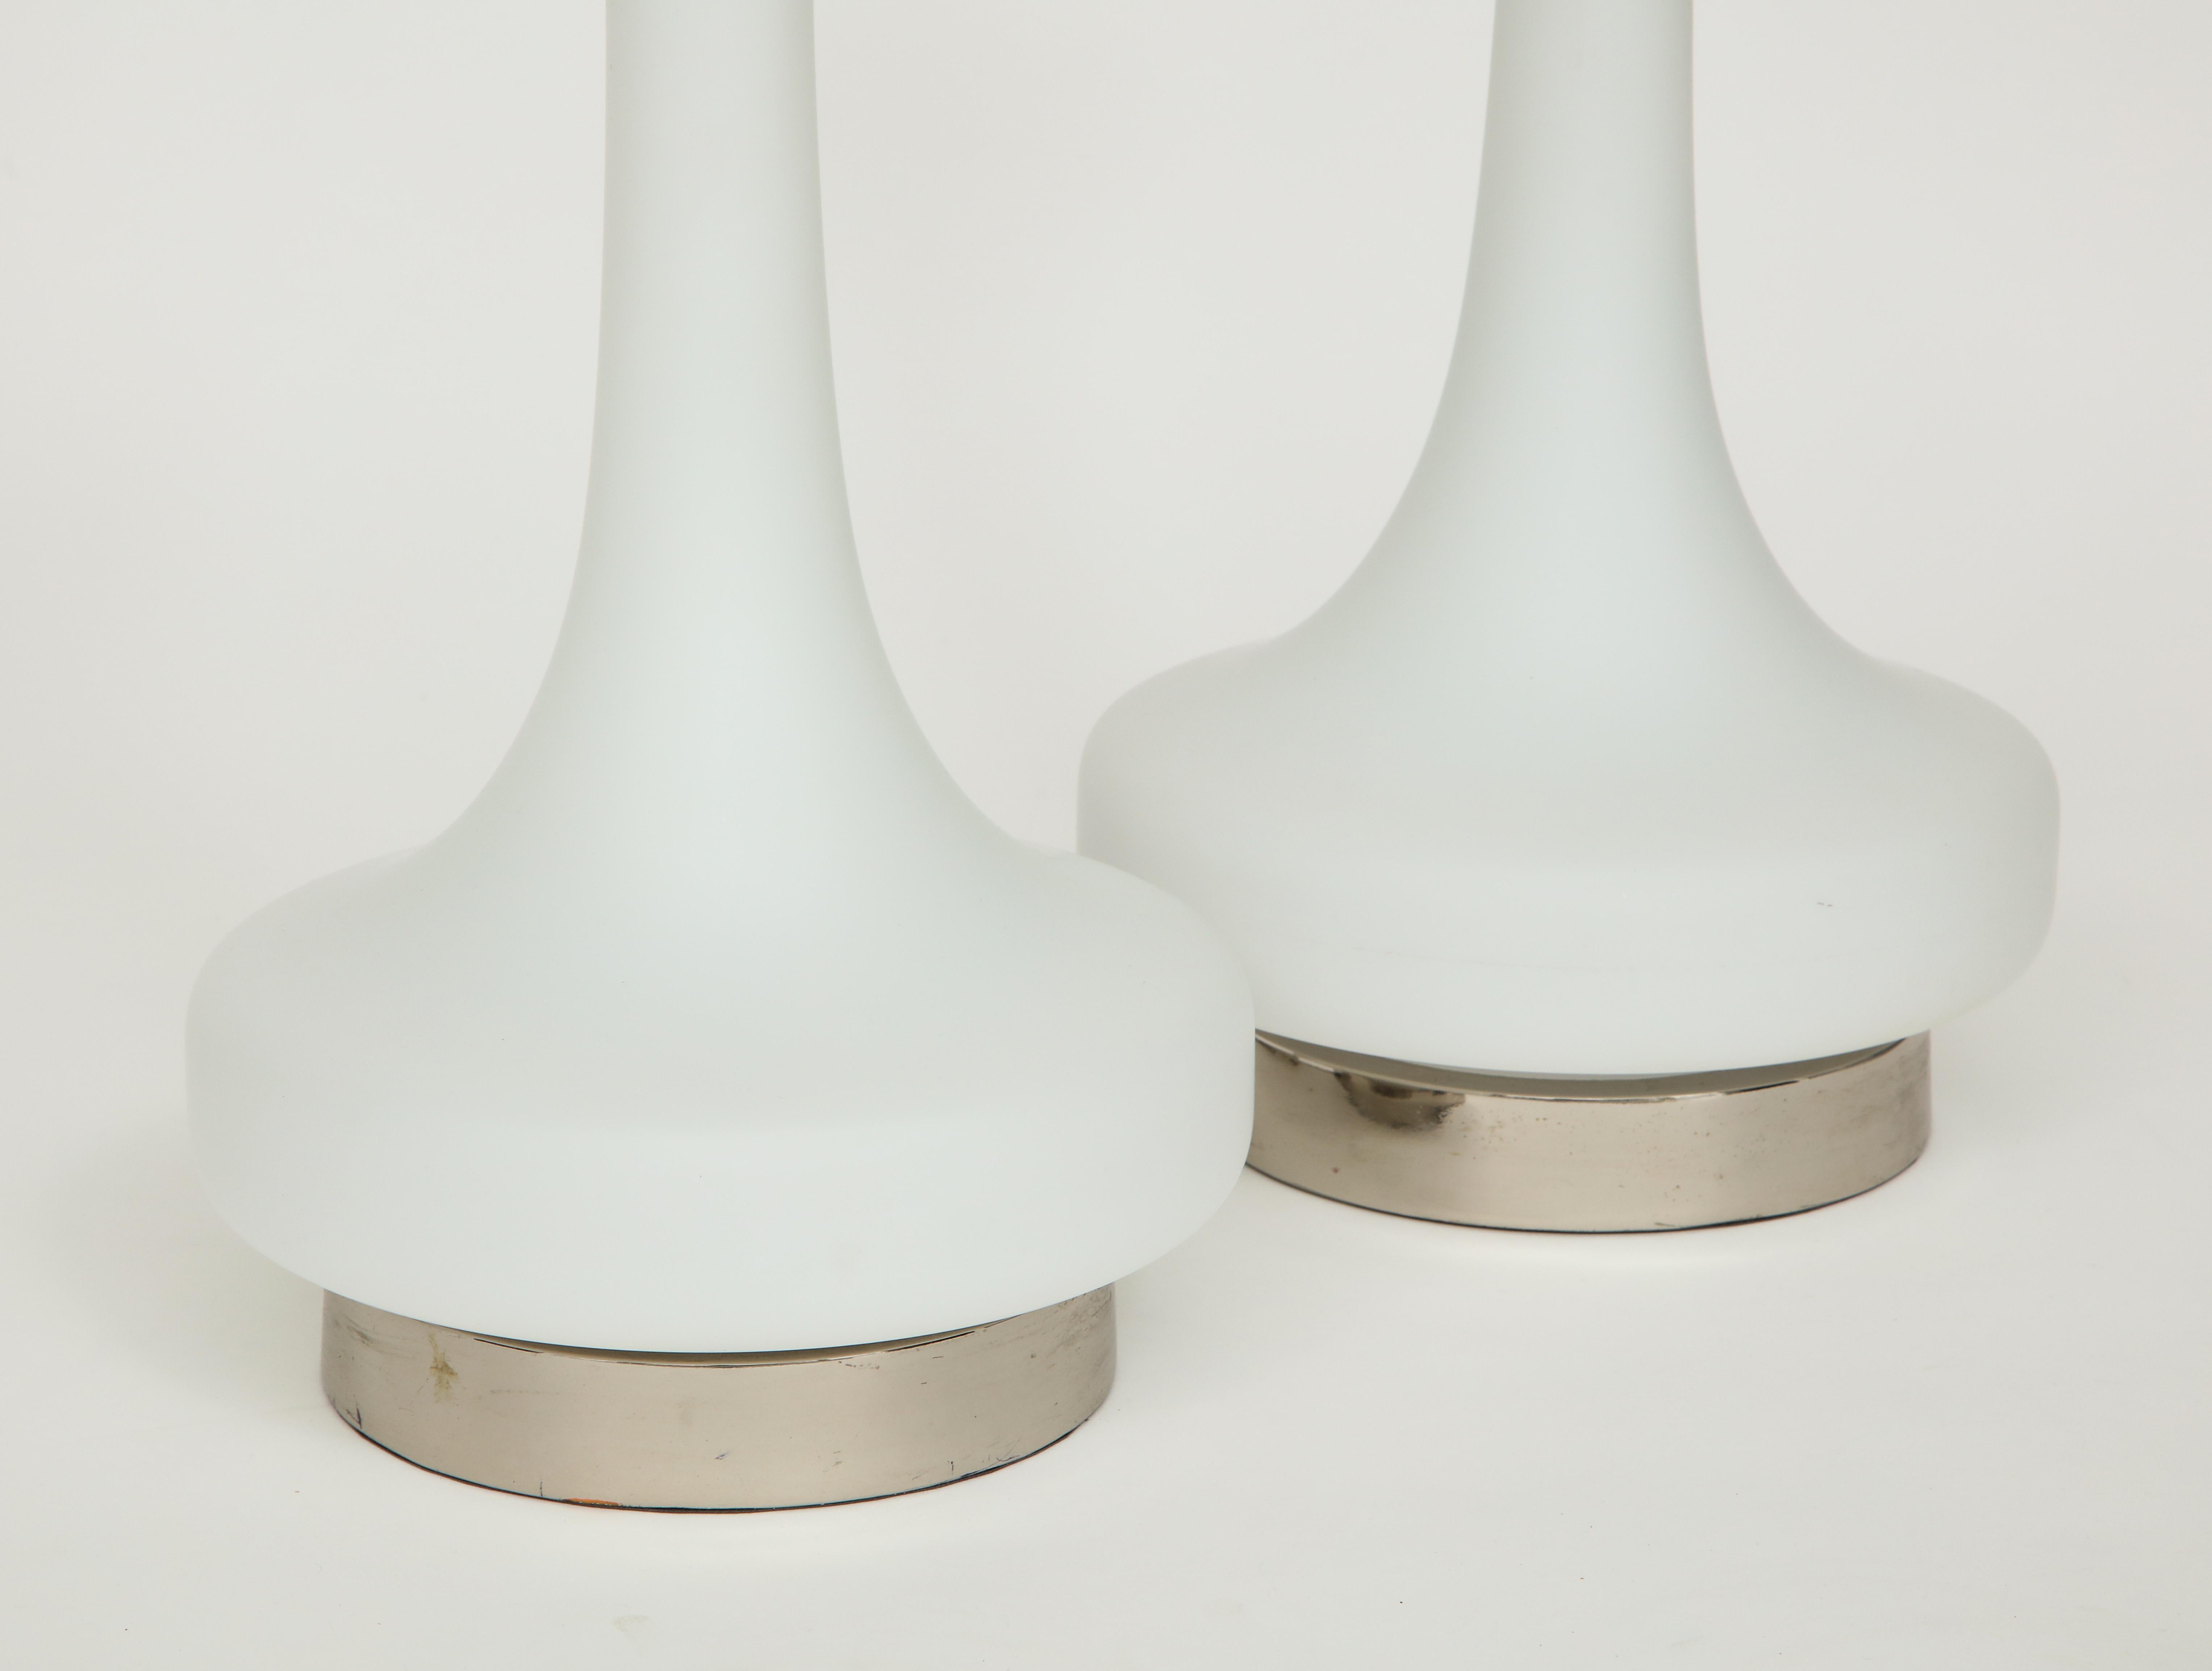 Pair of 1970s Lamps by Laurel Lamp Company (Moderne der Mitte des Jahrhunderts)